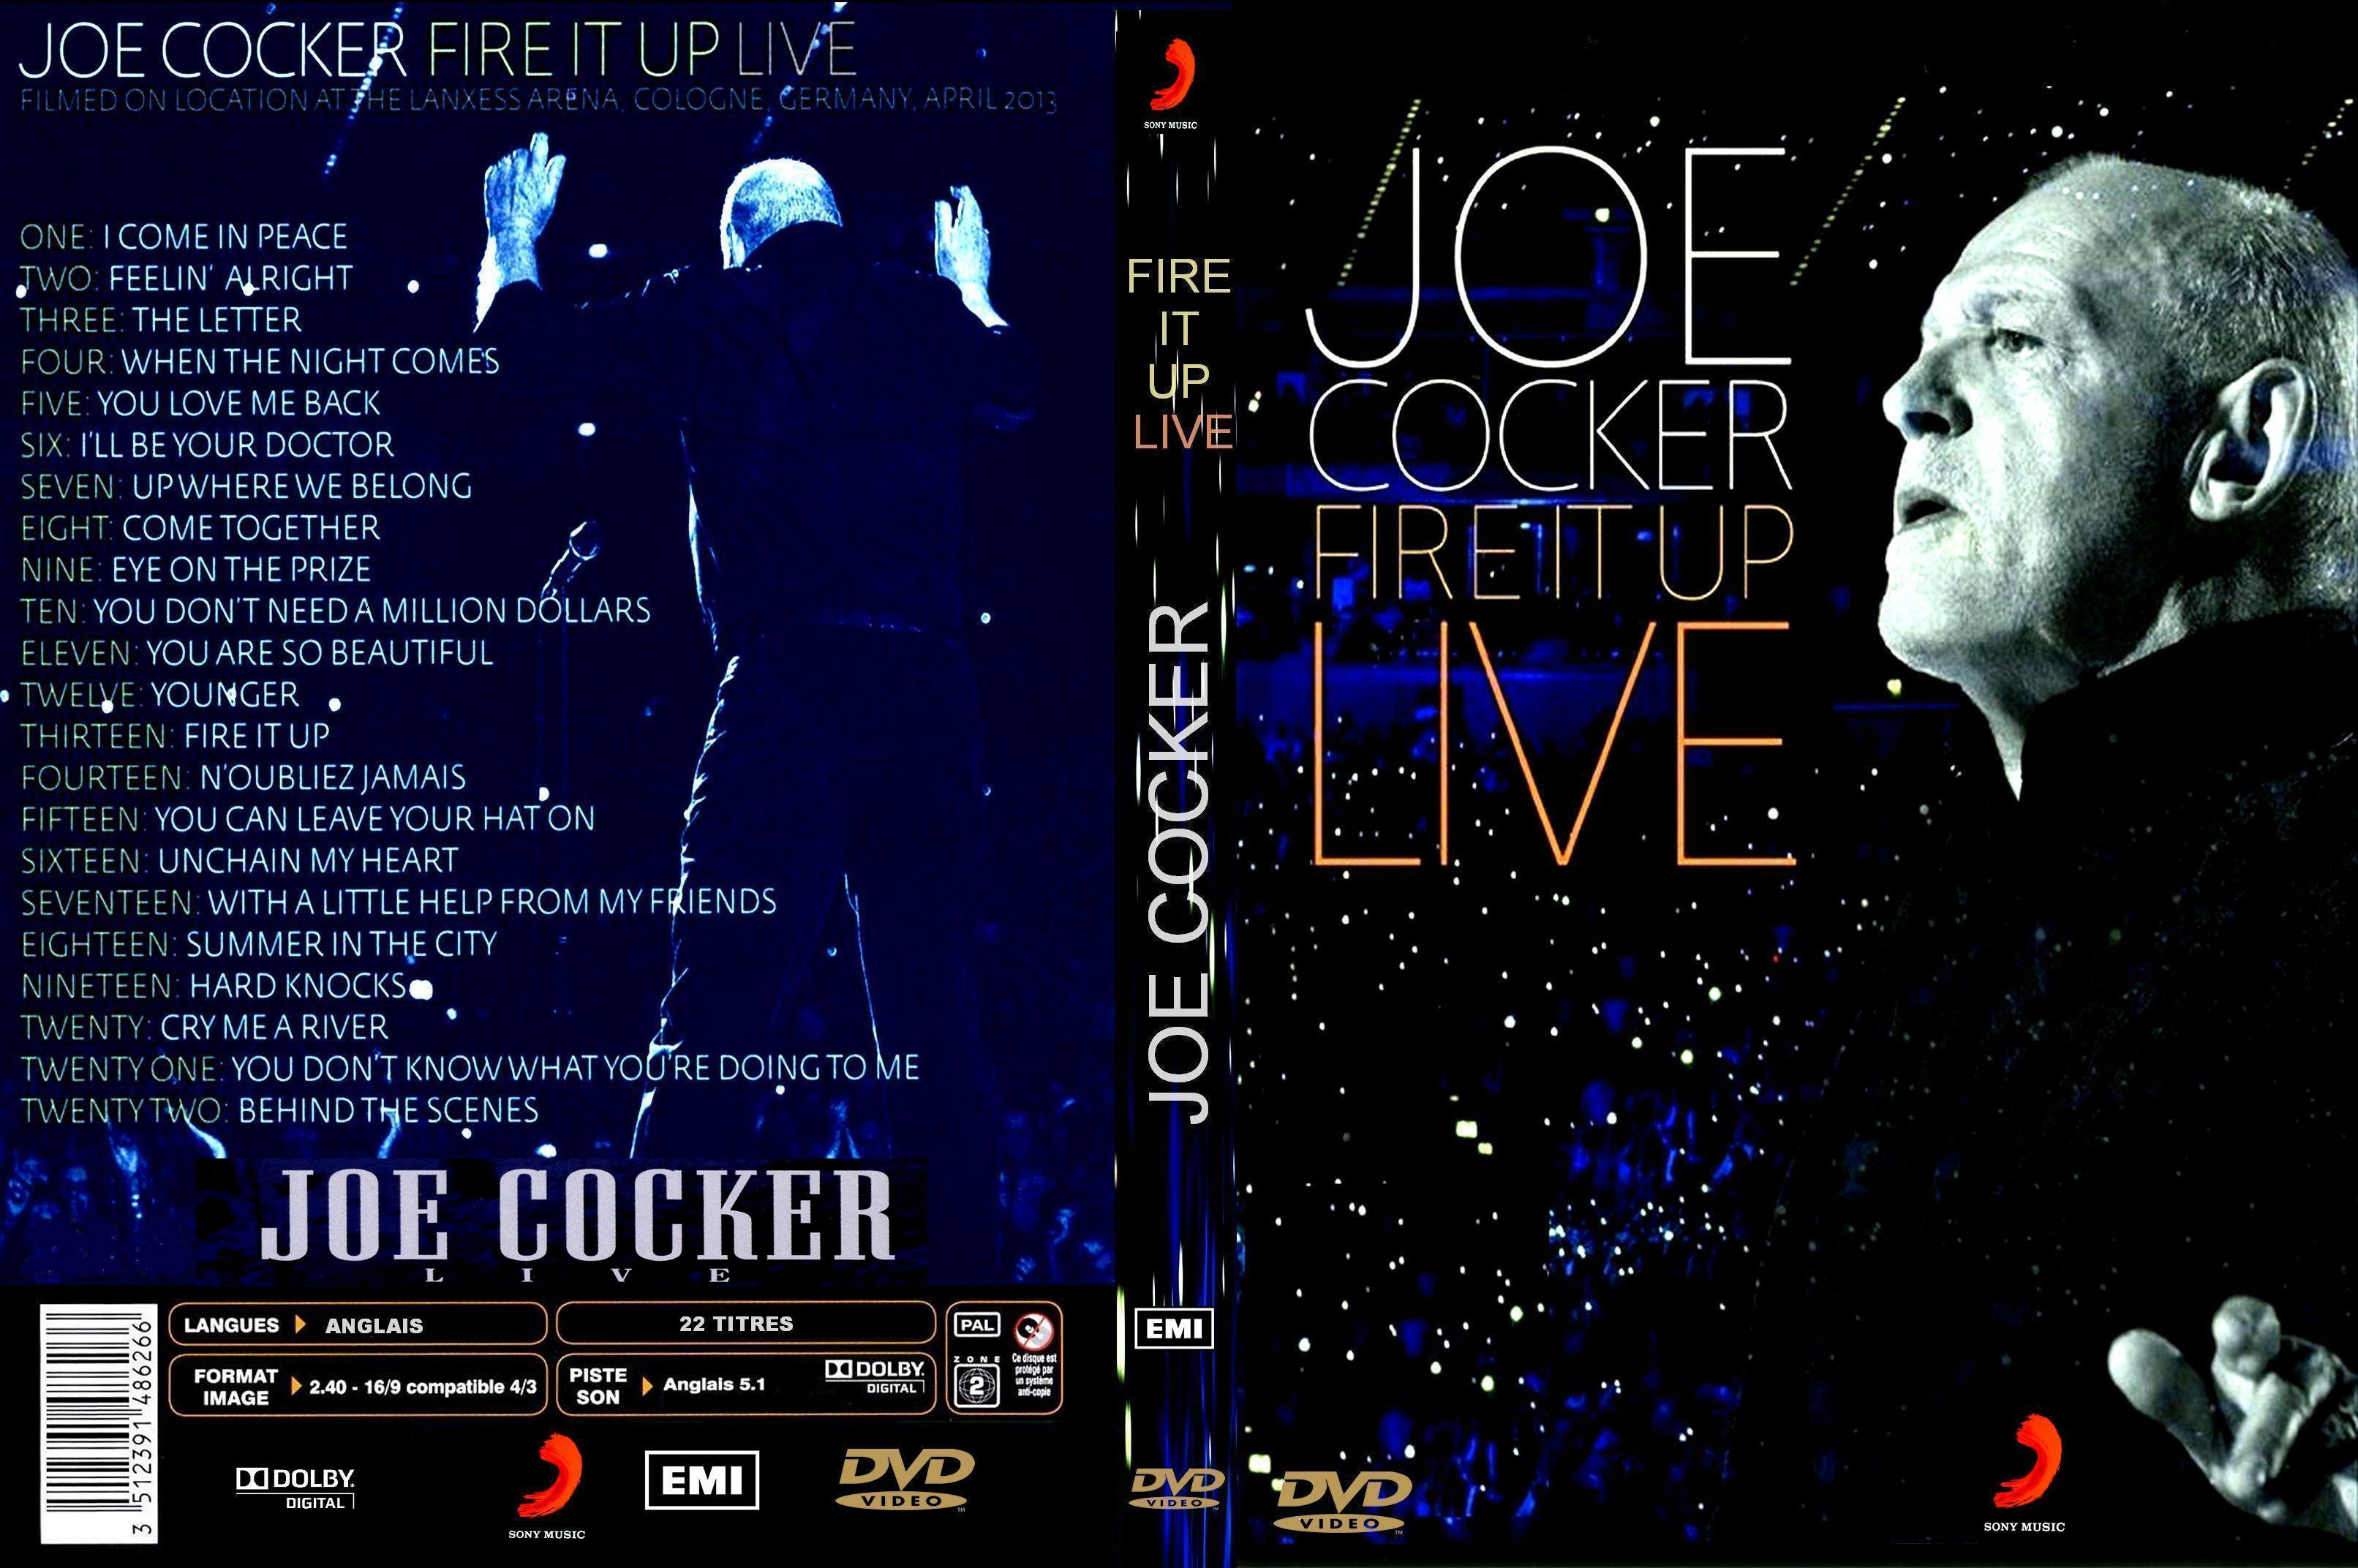 Jaquette DVD Joe Cocker fire it up live custom